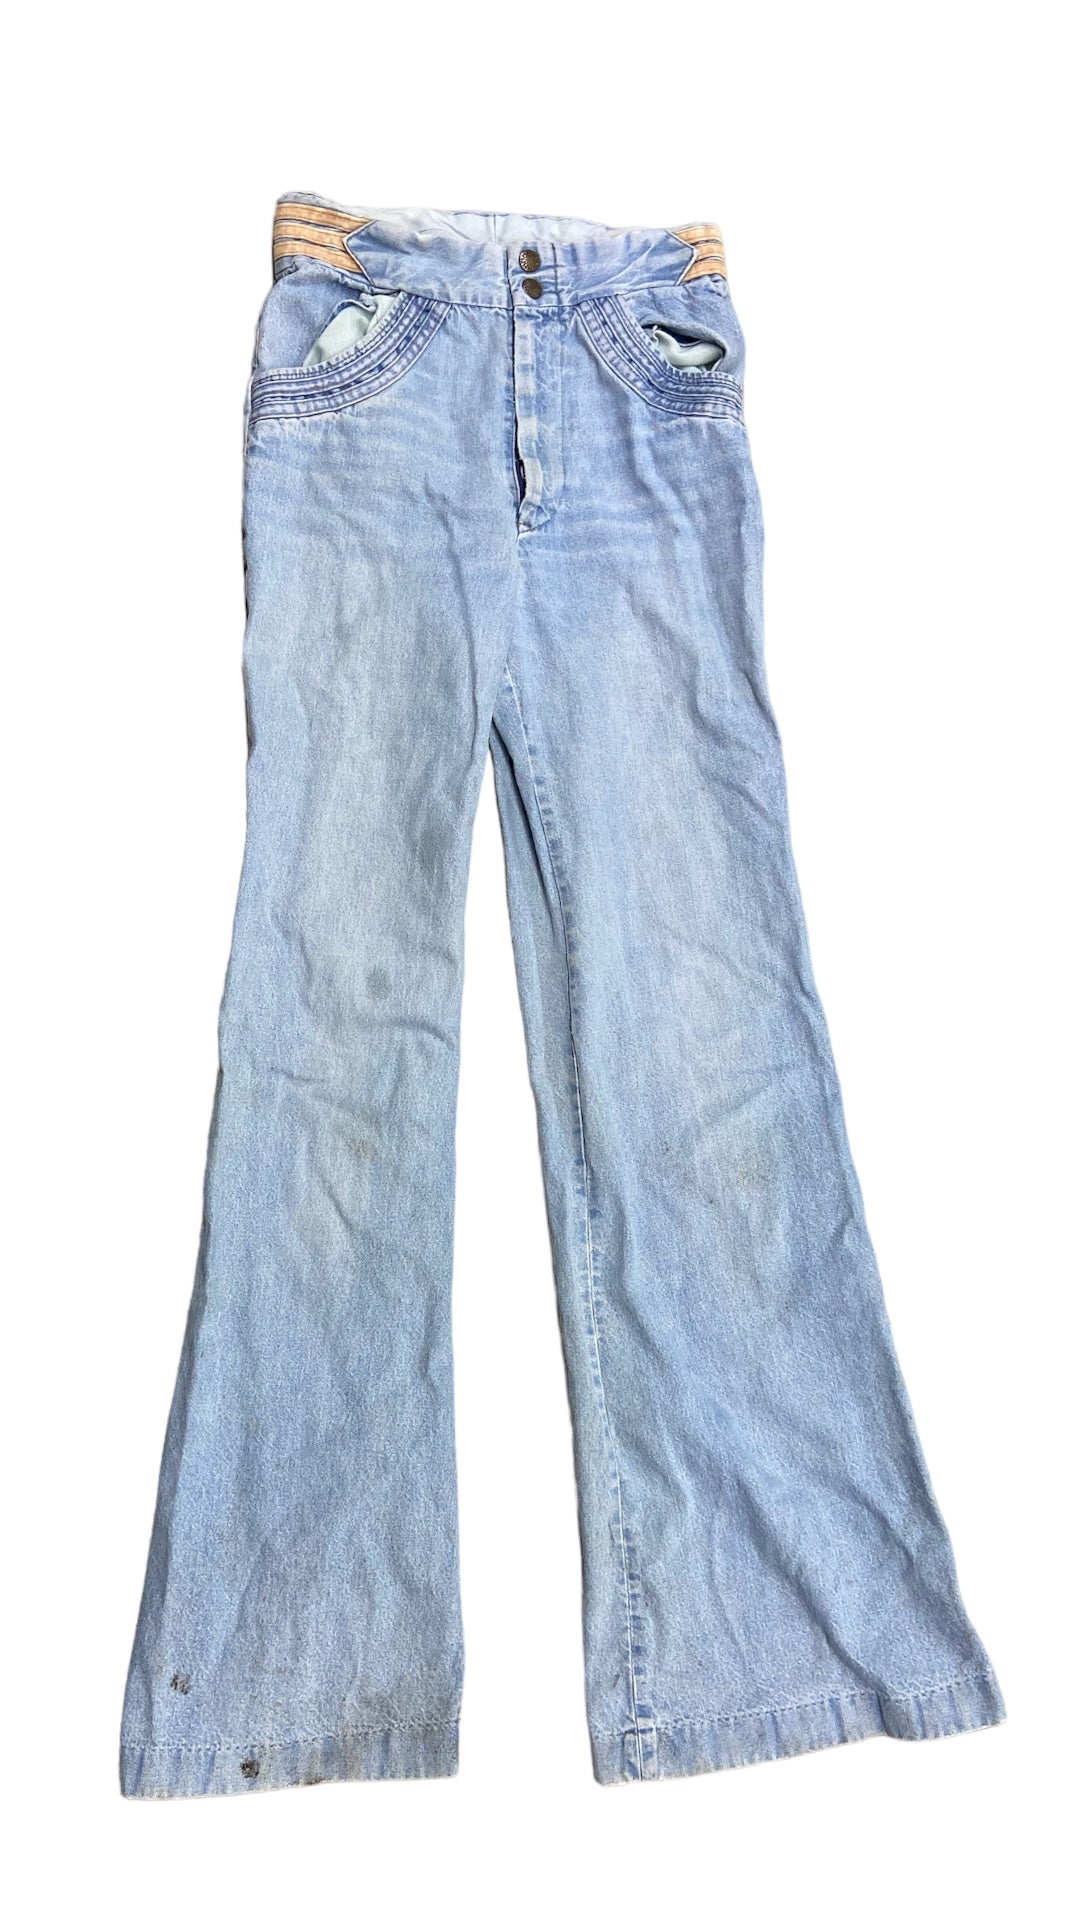 VTG Wmn's Flare Blue Jeans Sz 26x32